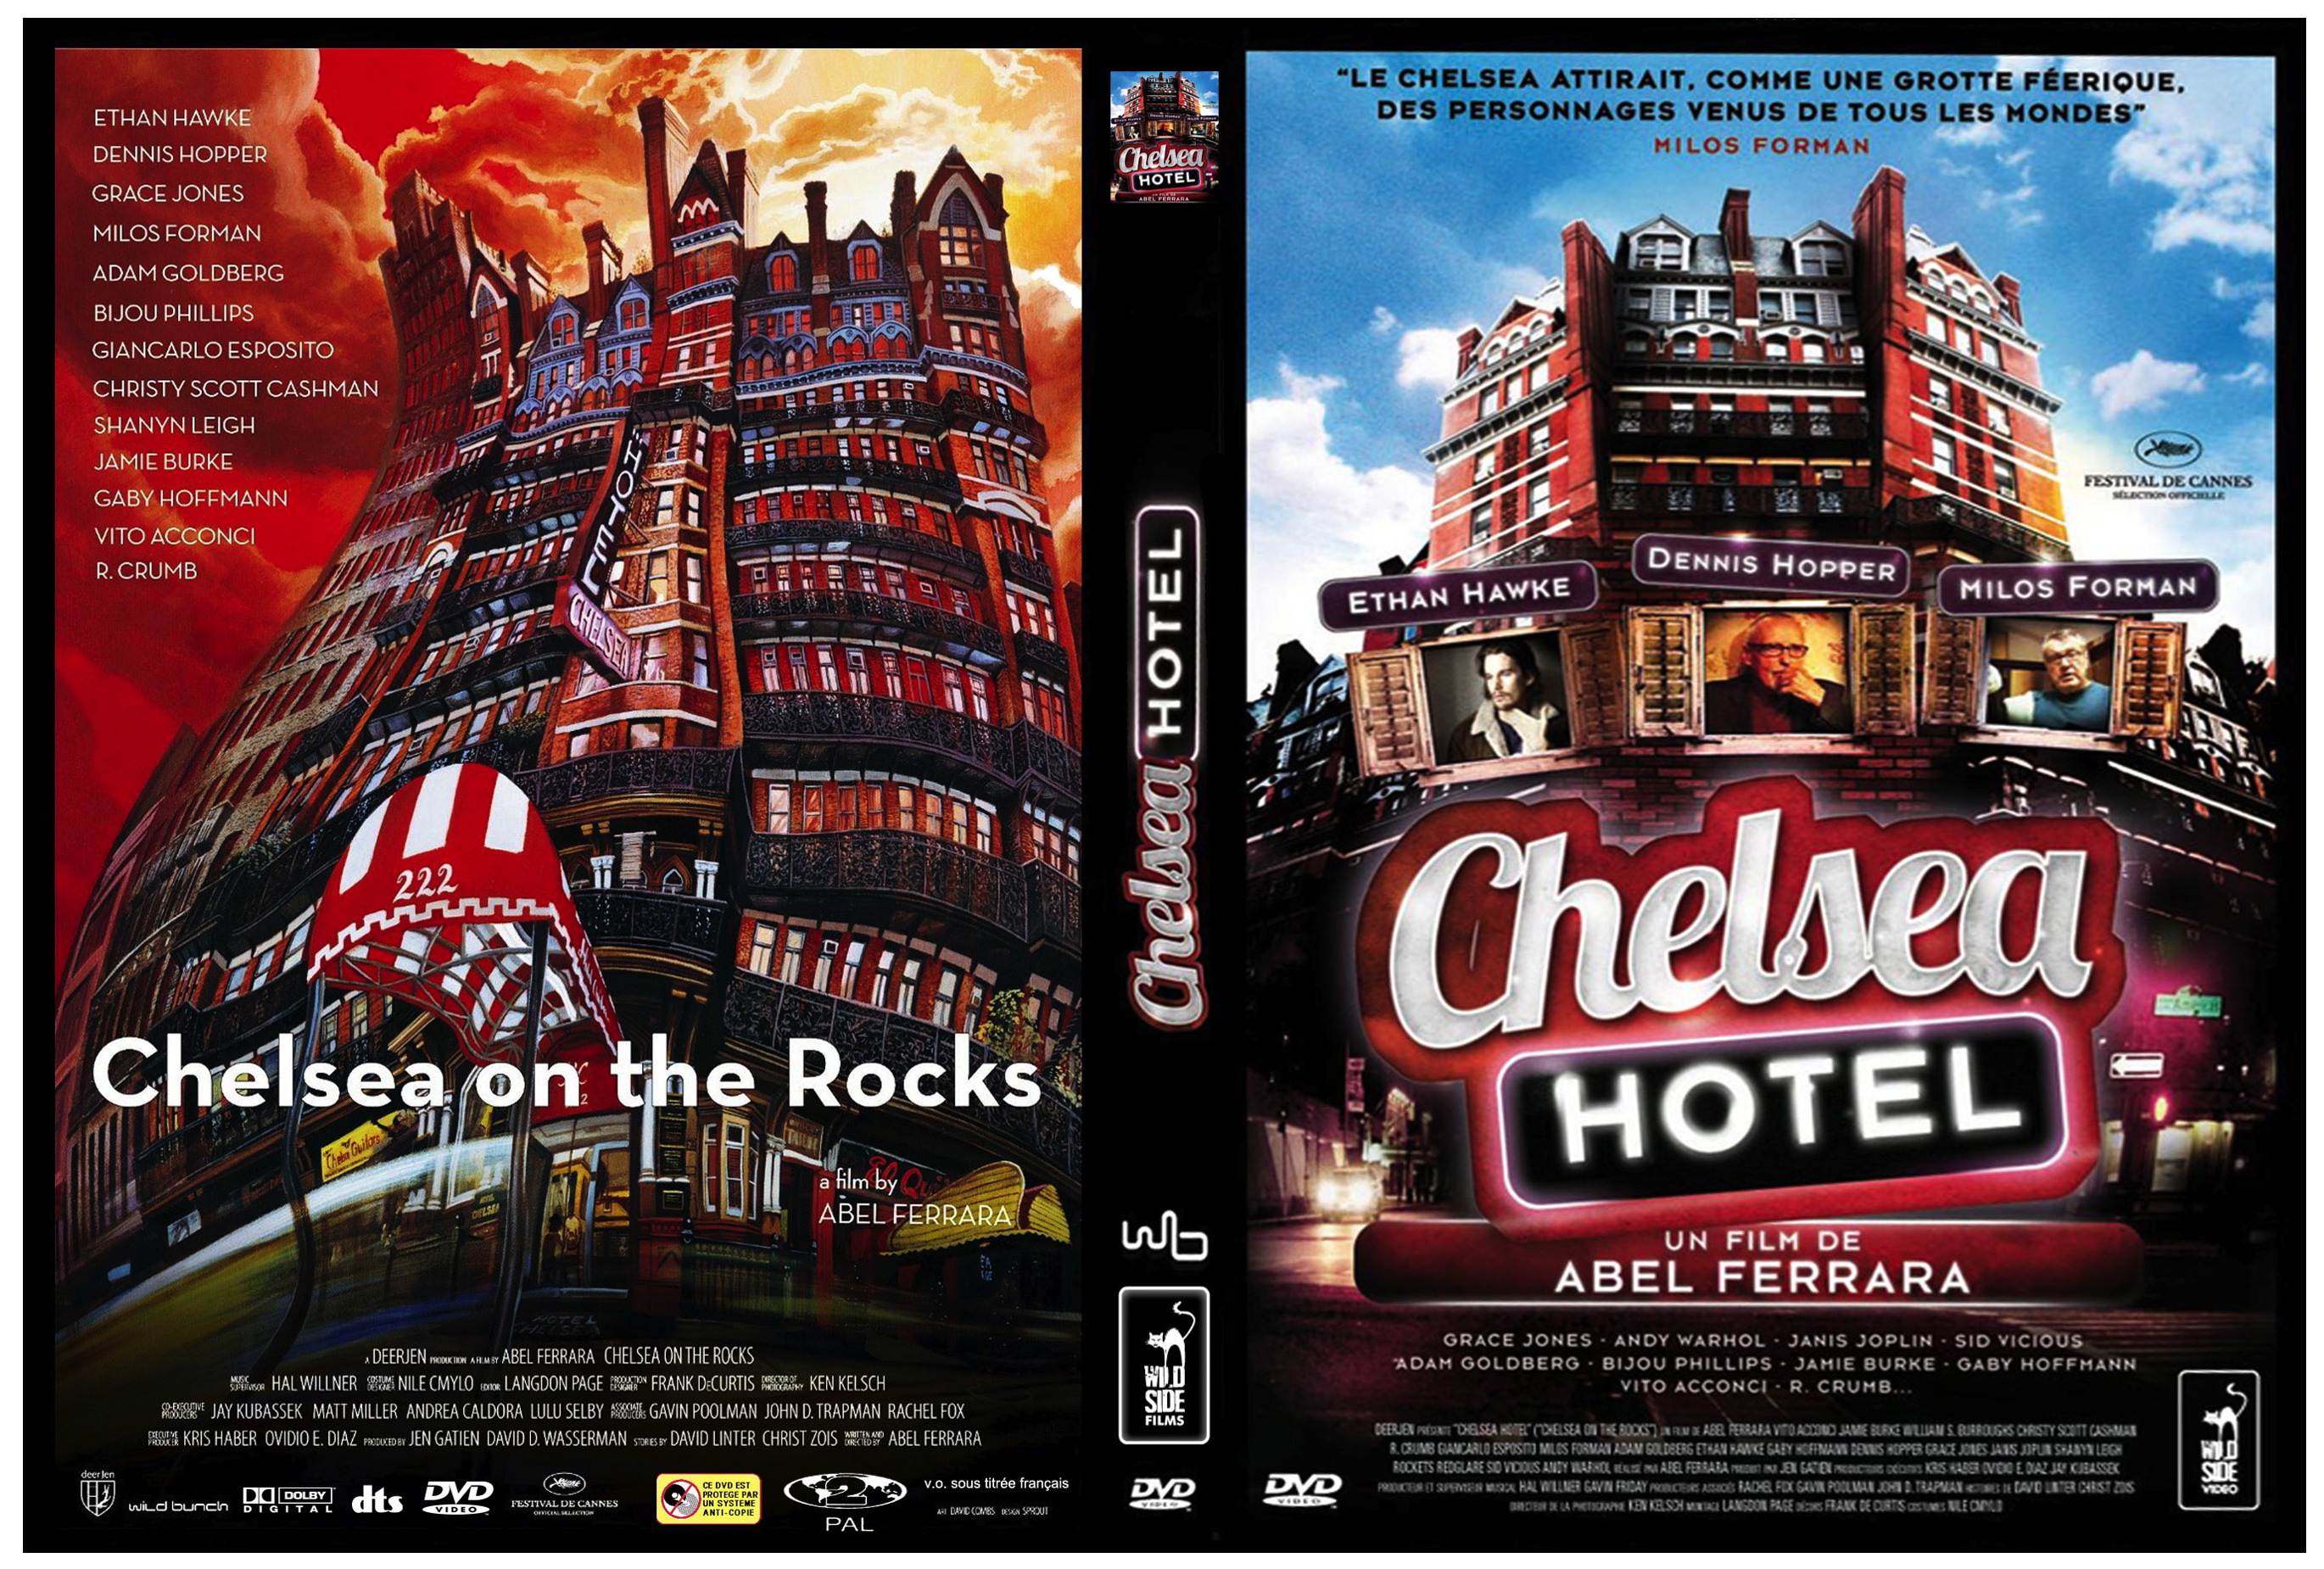 Jaquette DVD Chelsea Hotel custom